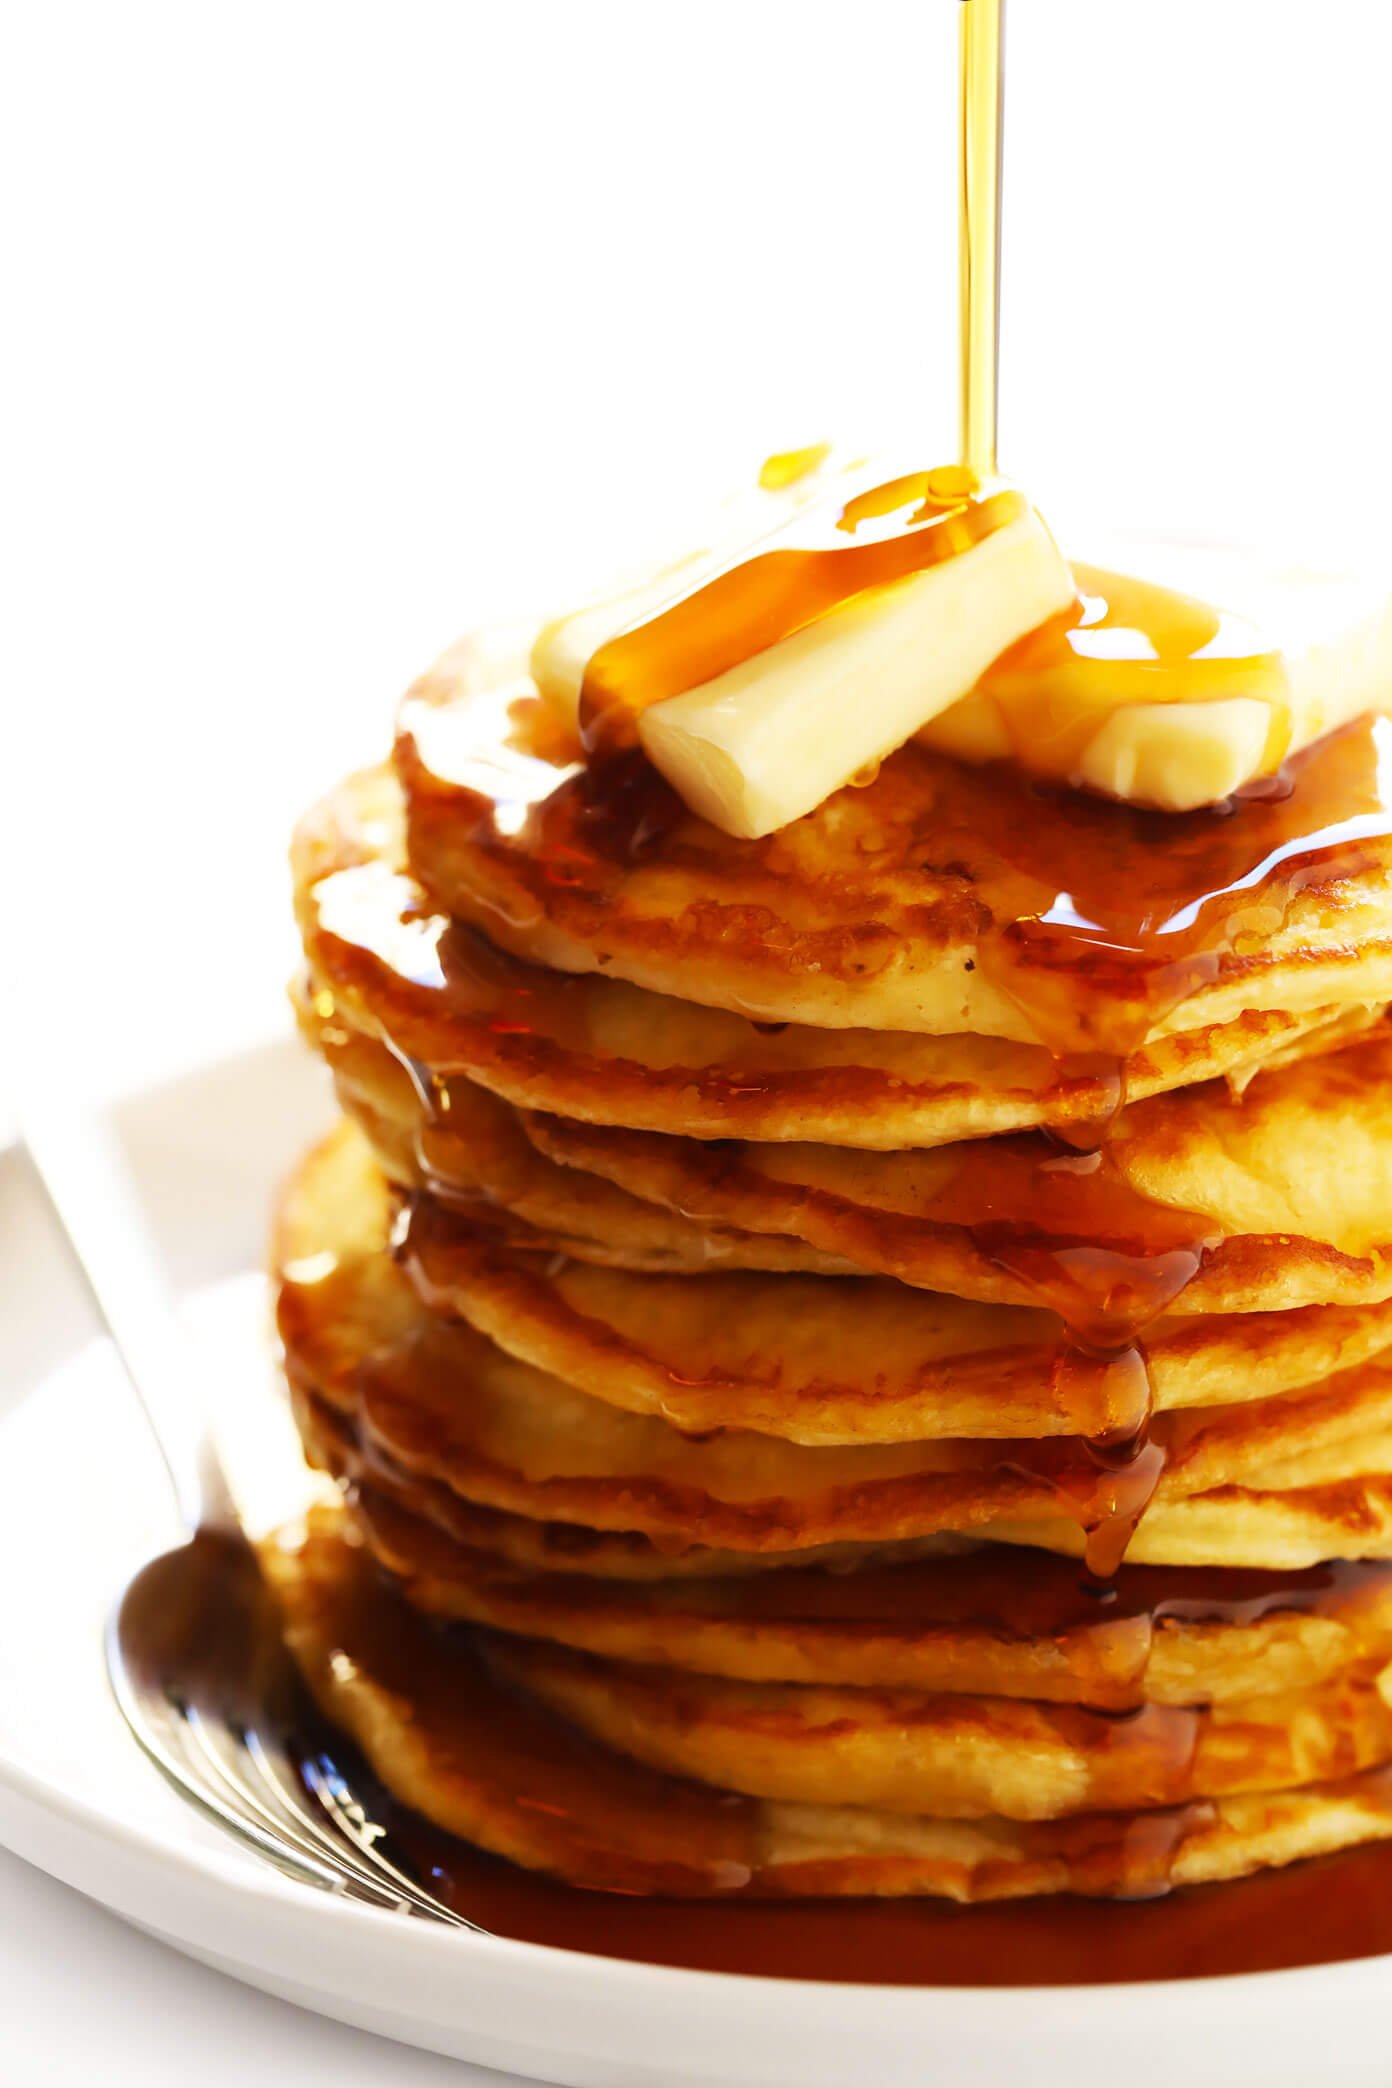 https://www.gimmesomeoven.com/wp-content/uploads/2019/09/Perfect-Buttermilk-Pancakes-Recipe-1.jpg